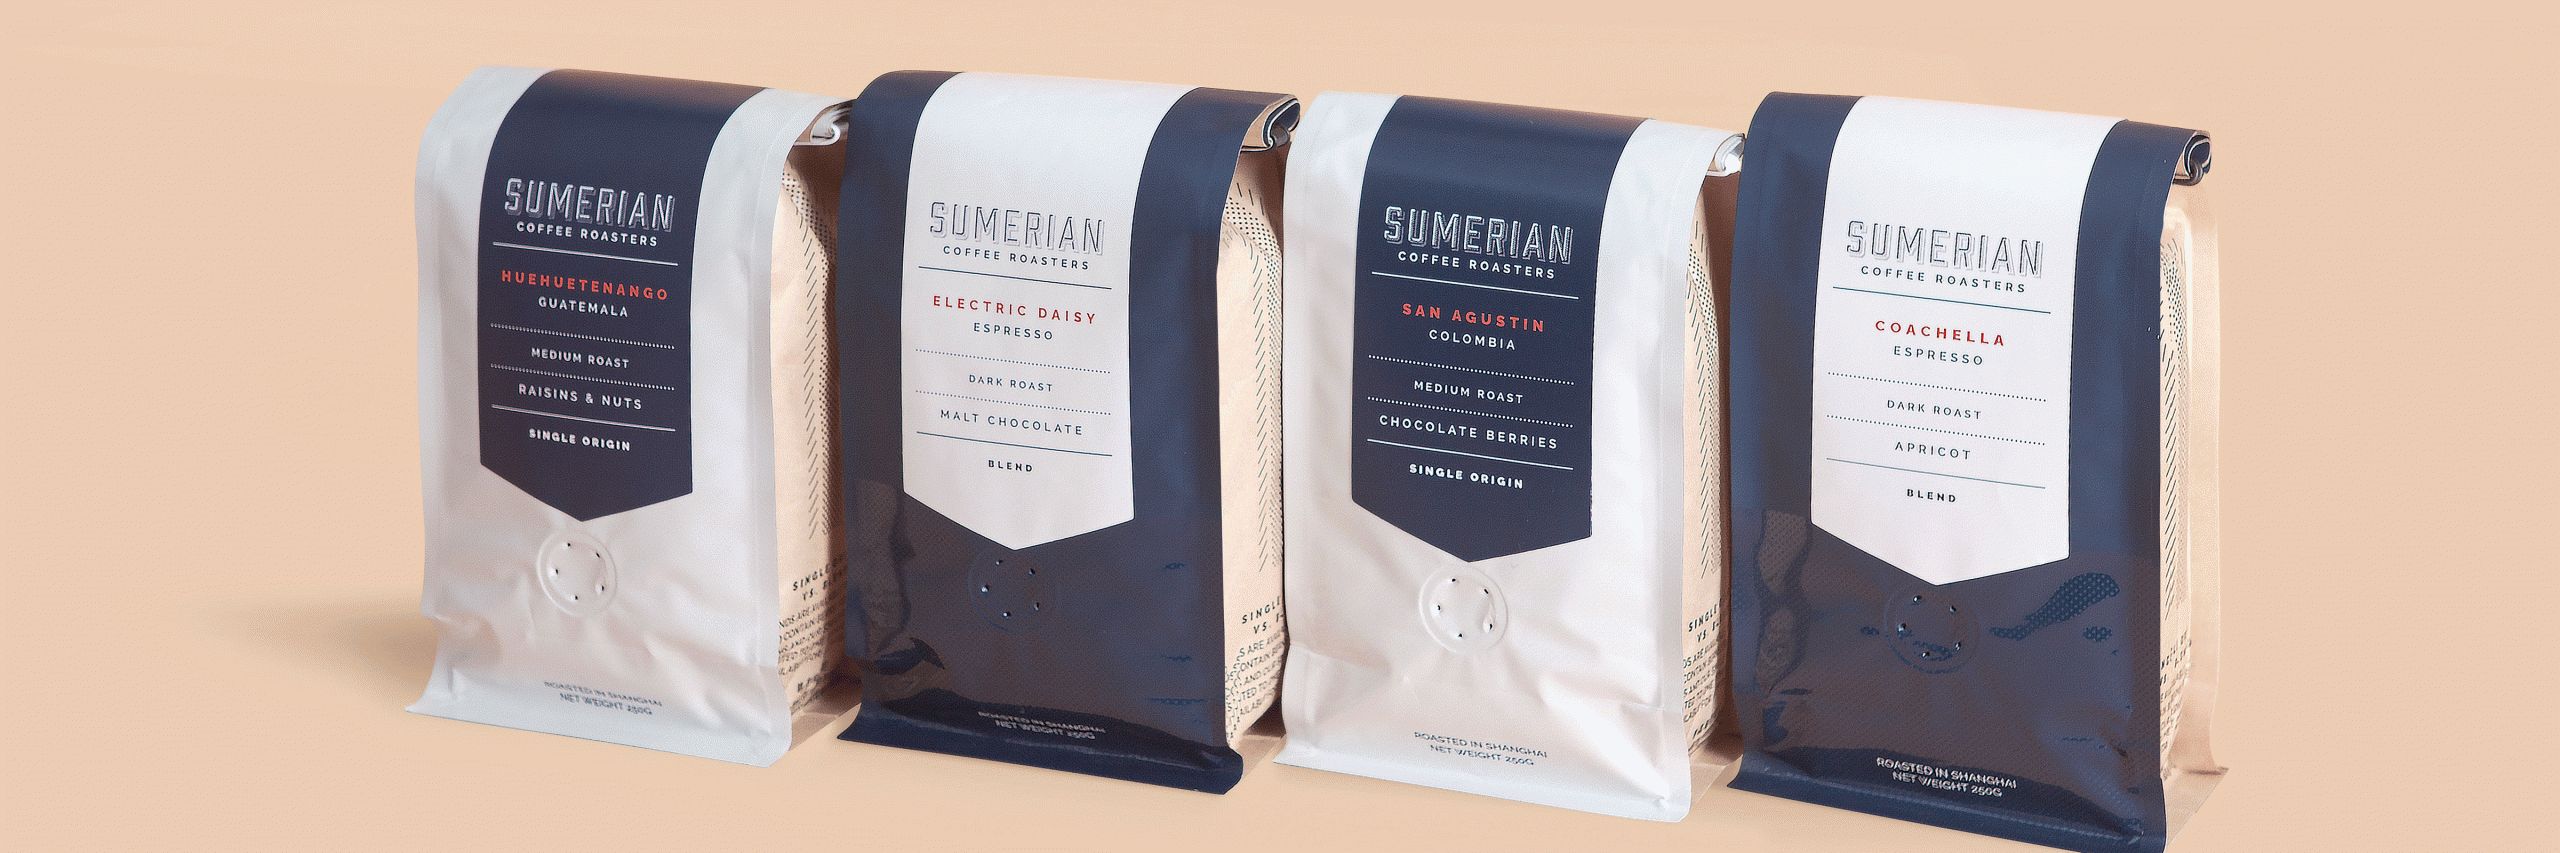 Sumerian Coffee Roasters, Shanghai Studio Rushton-Smith Custom Coffee Bag and Label Design